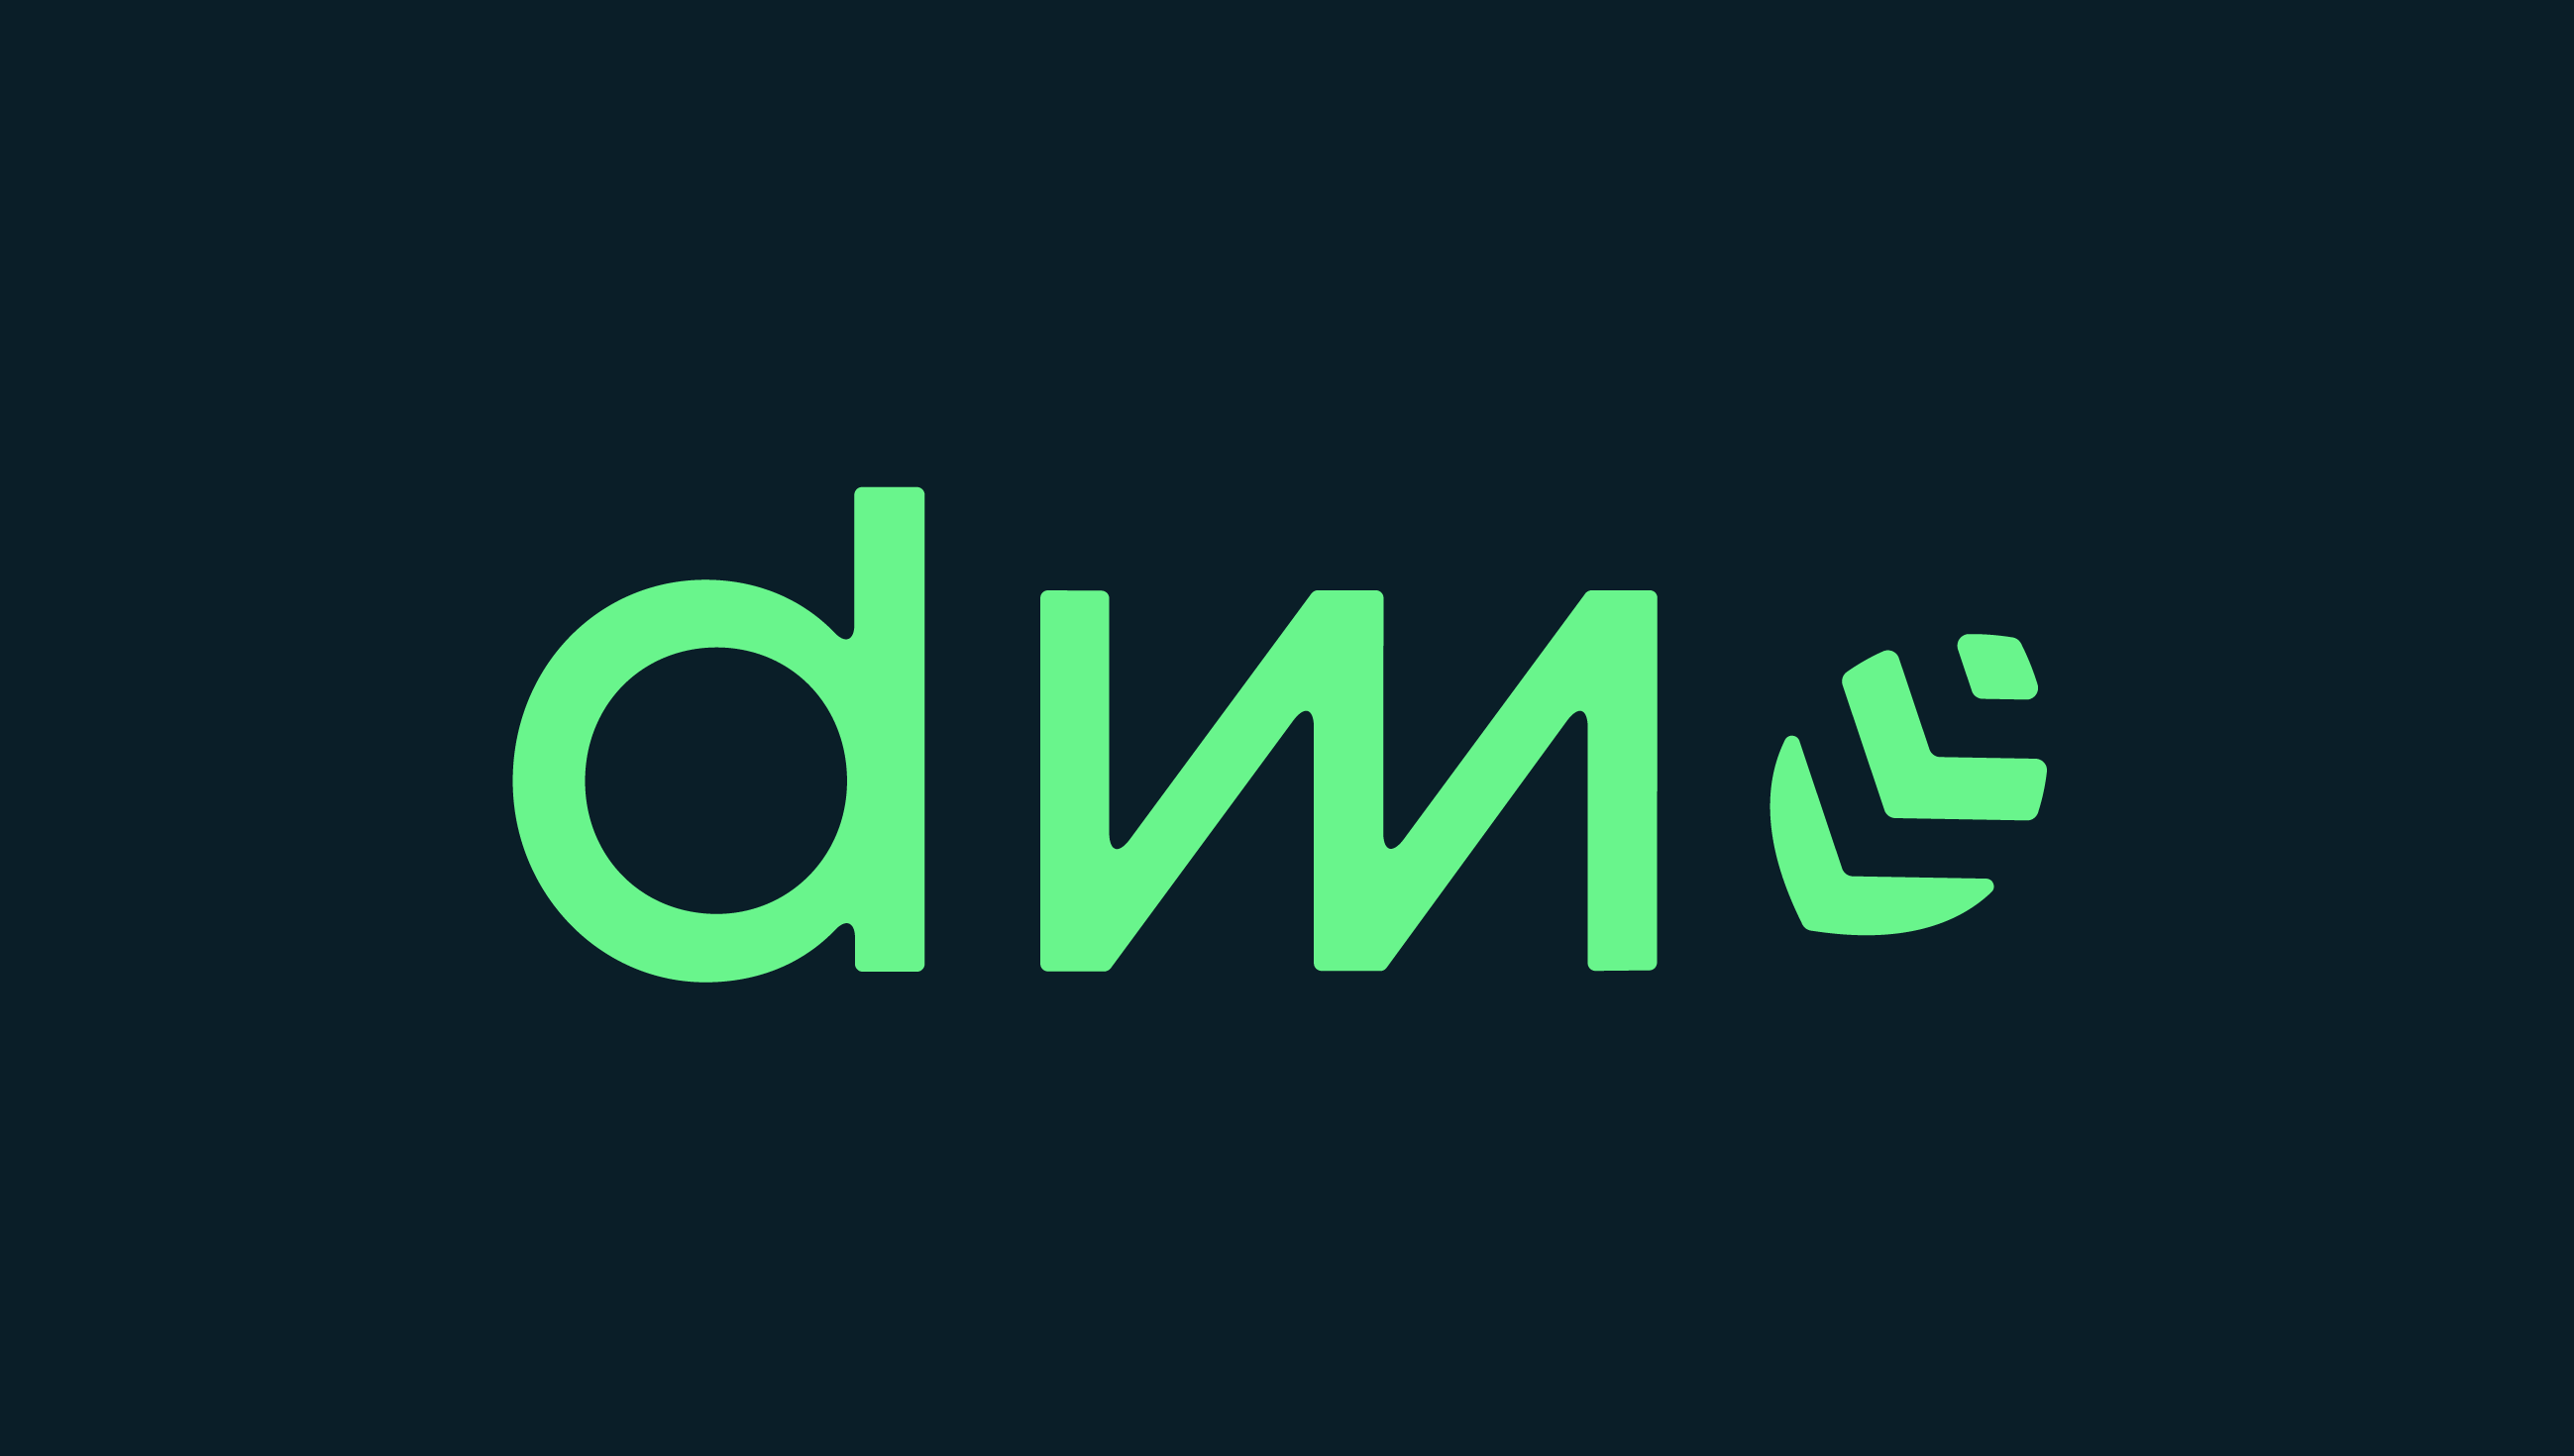 datamint abbreviated logo